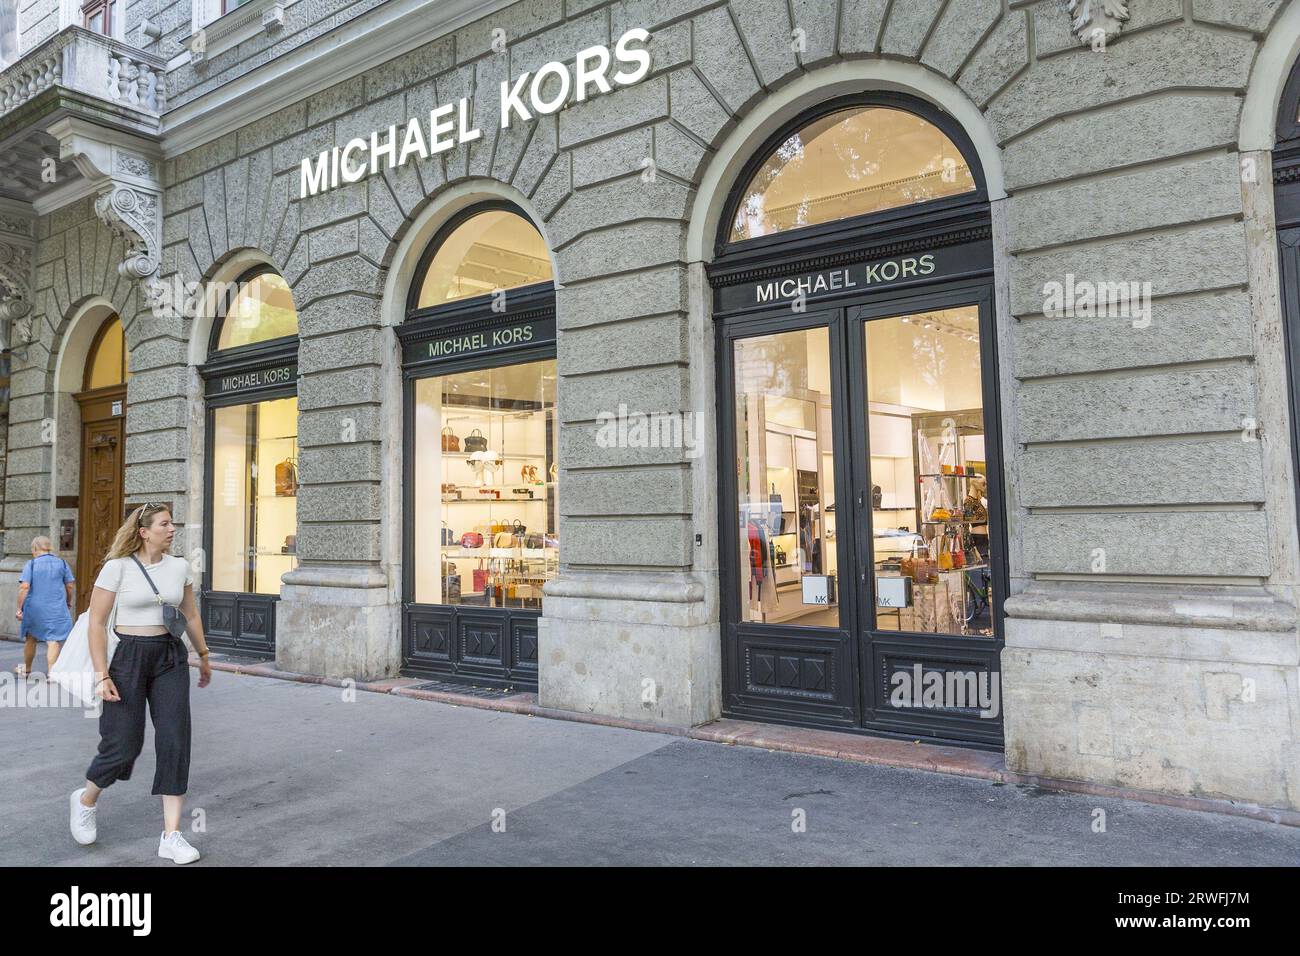 Michael Kors luxury shop in Budapest Stock Photo - Alamy